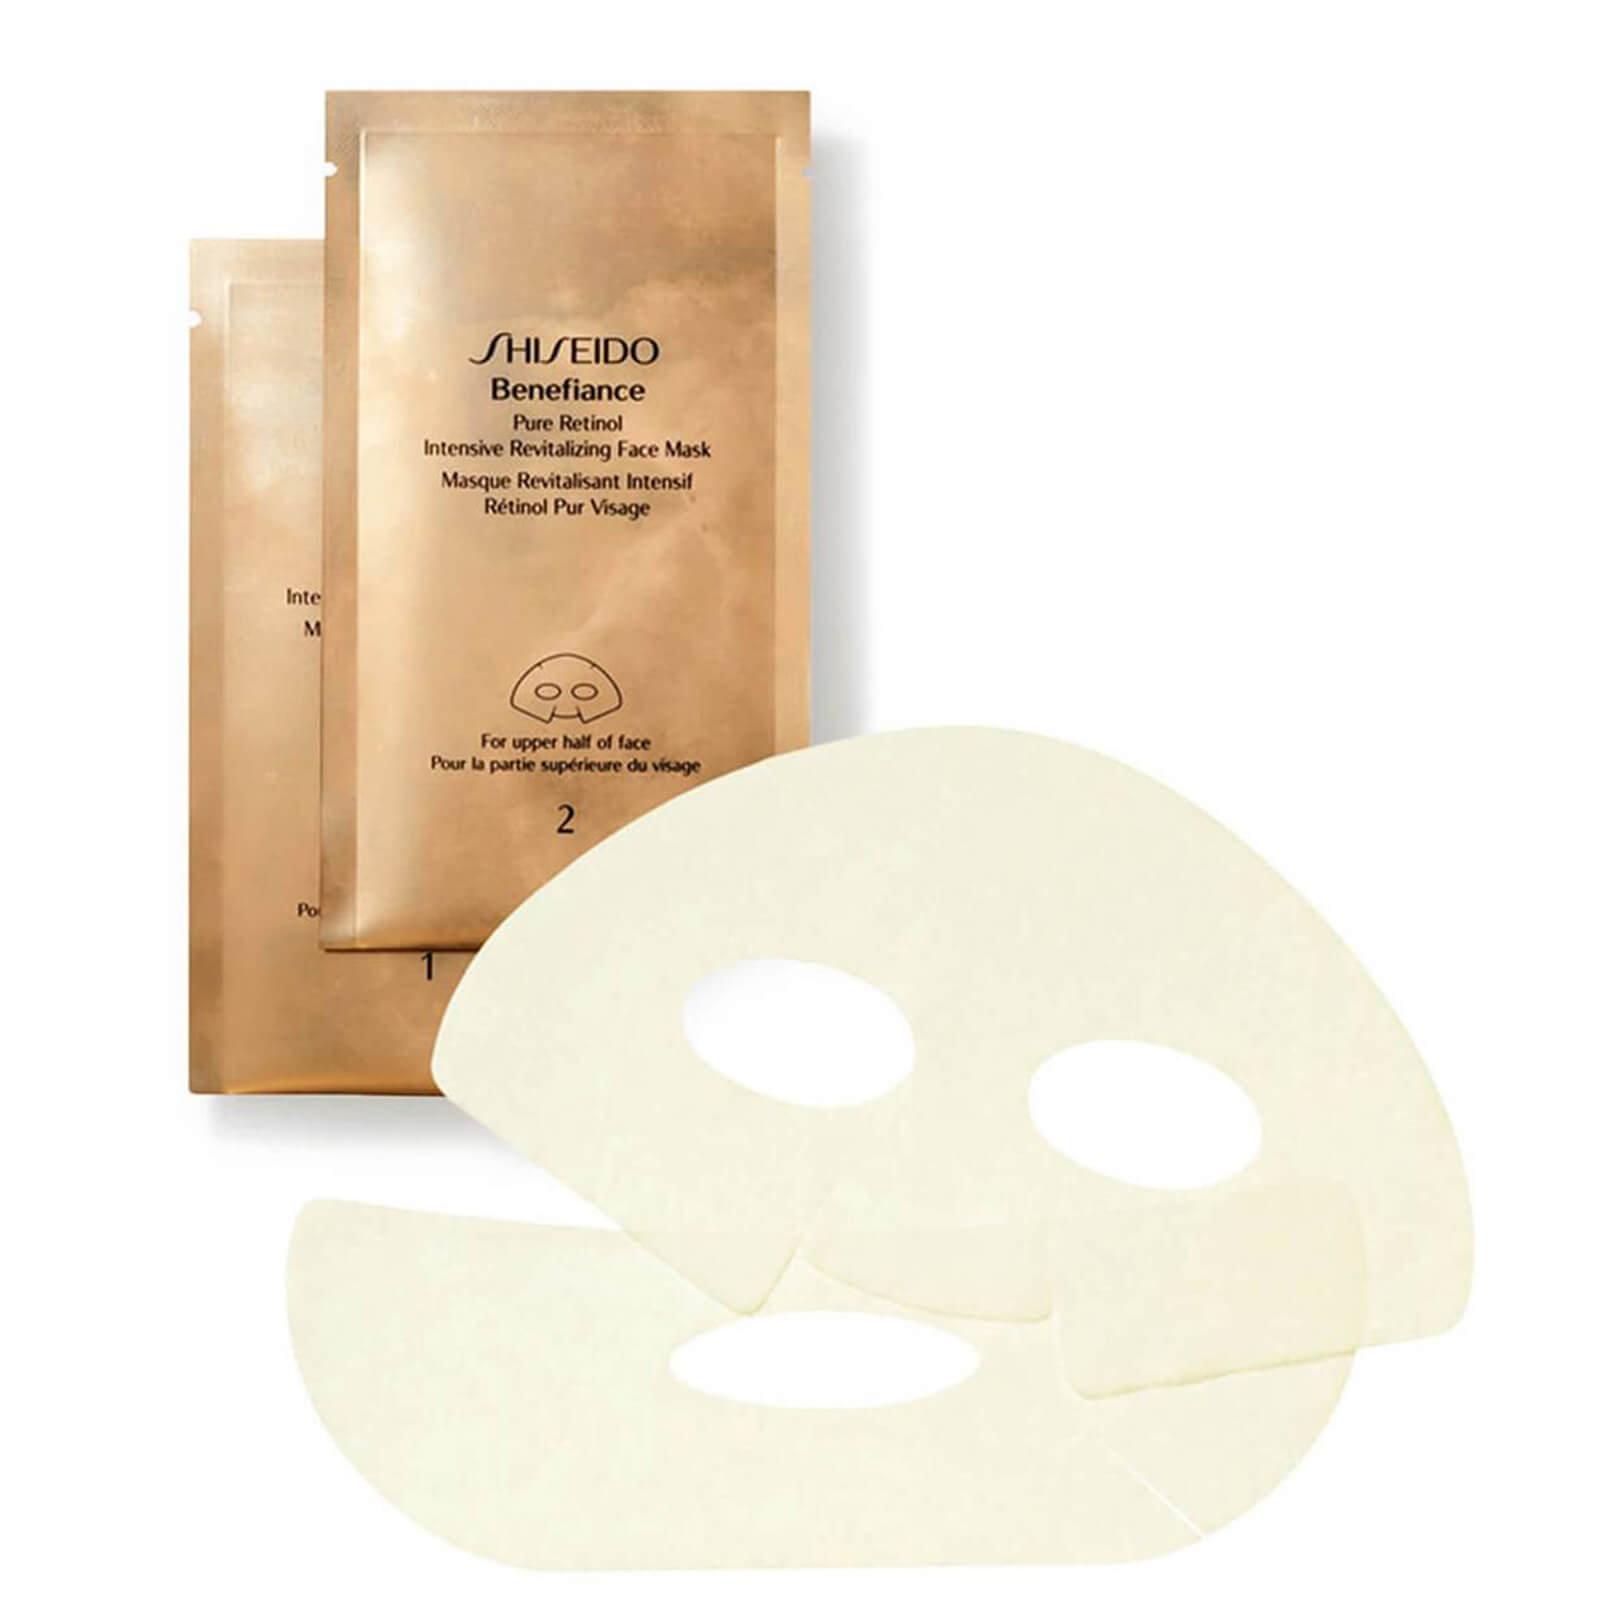 Shiseido Benefiance Pure Retinol Intensive Revitalizing Face Mask x 4 sobres